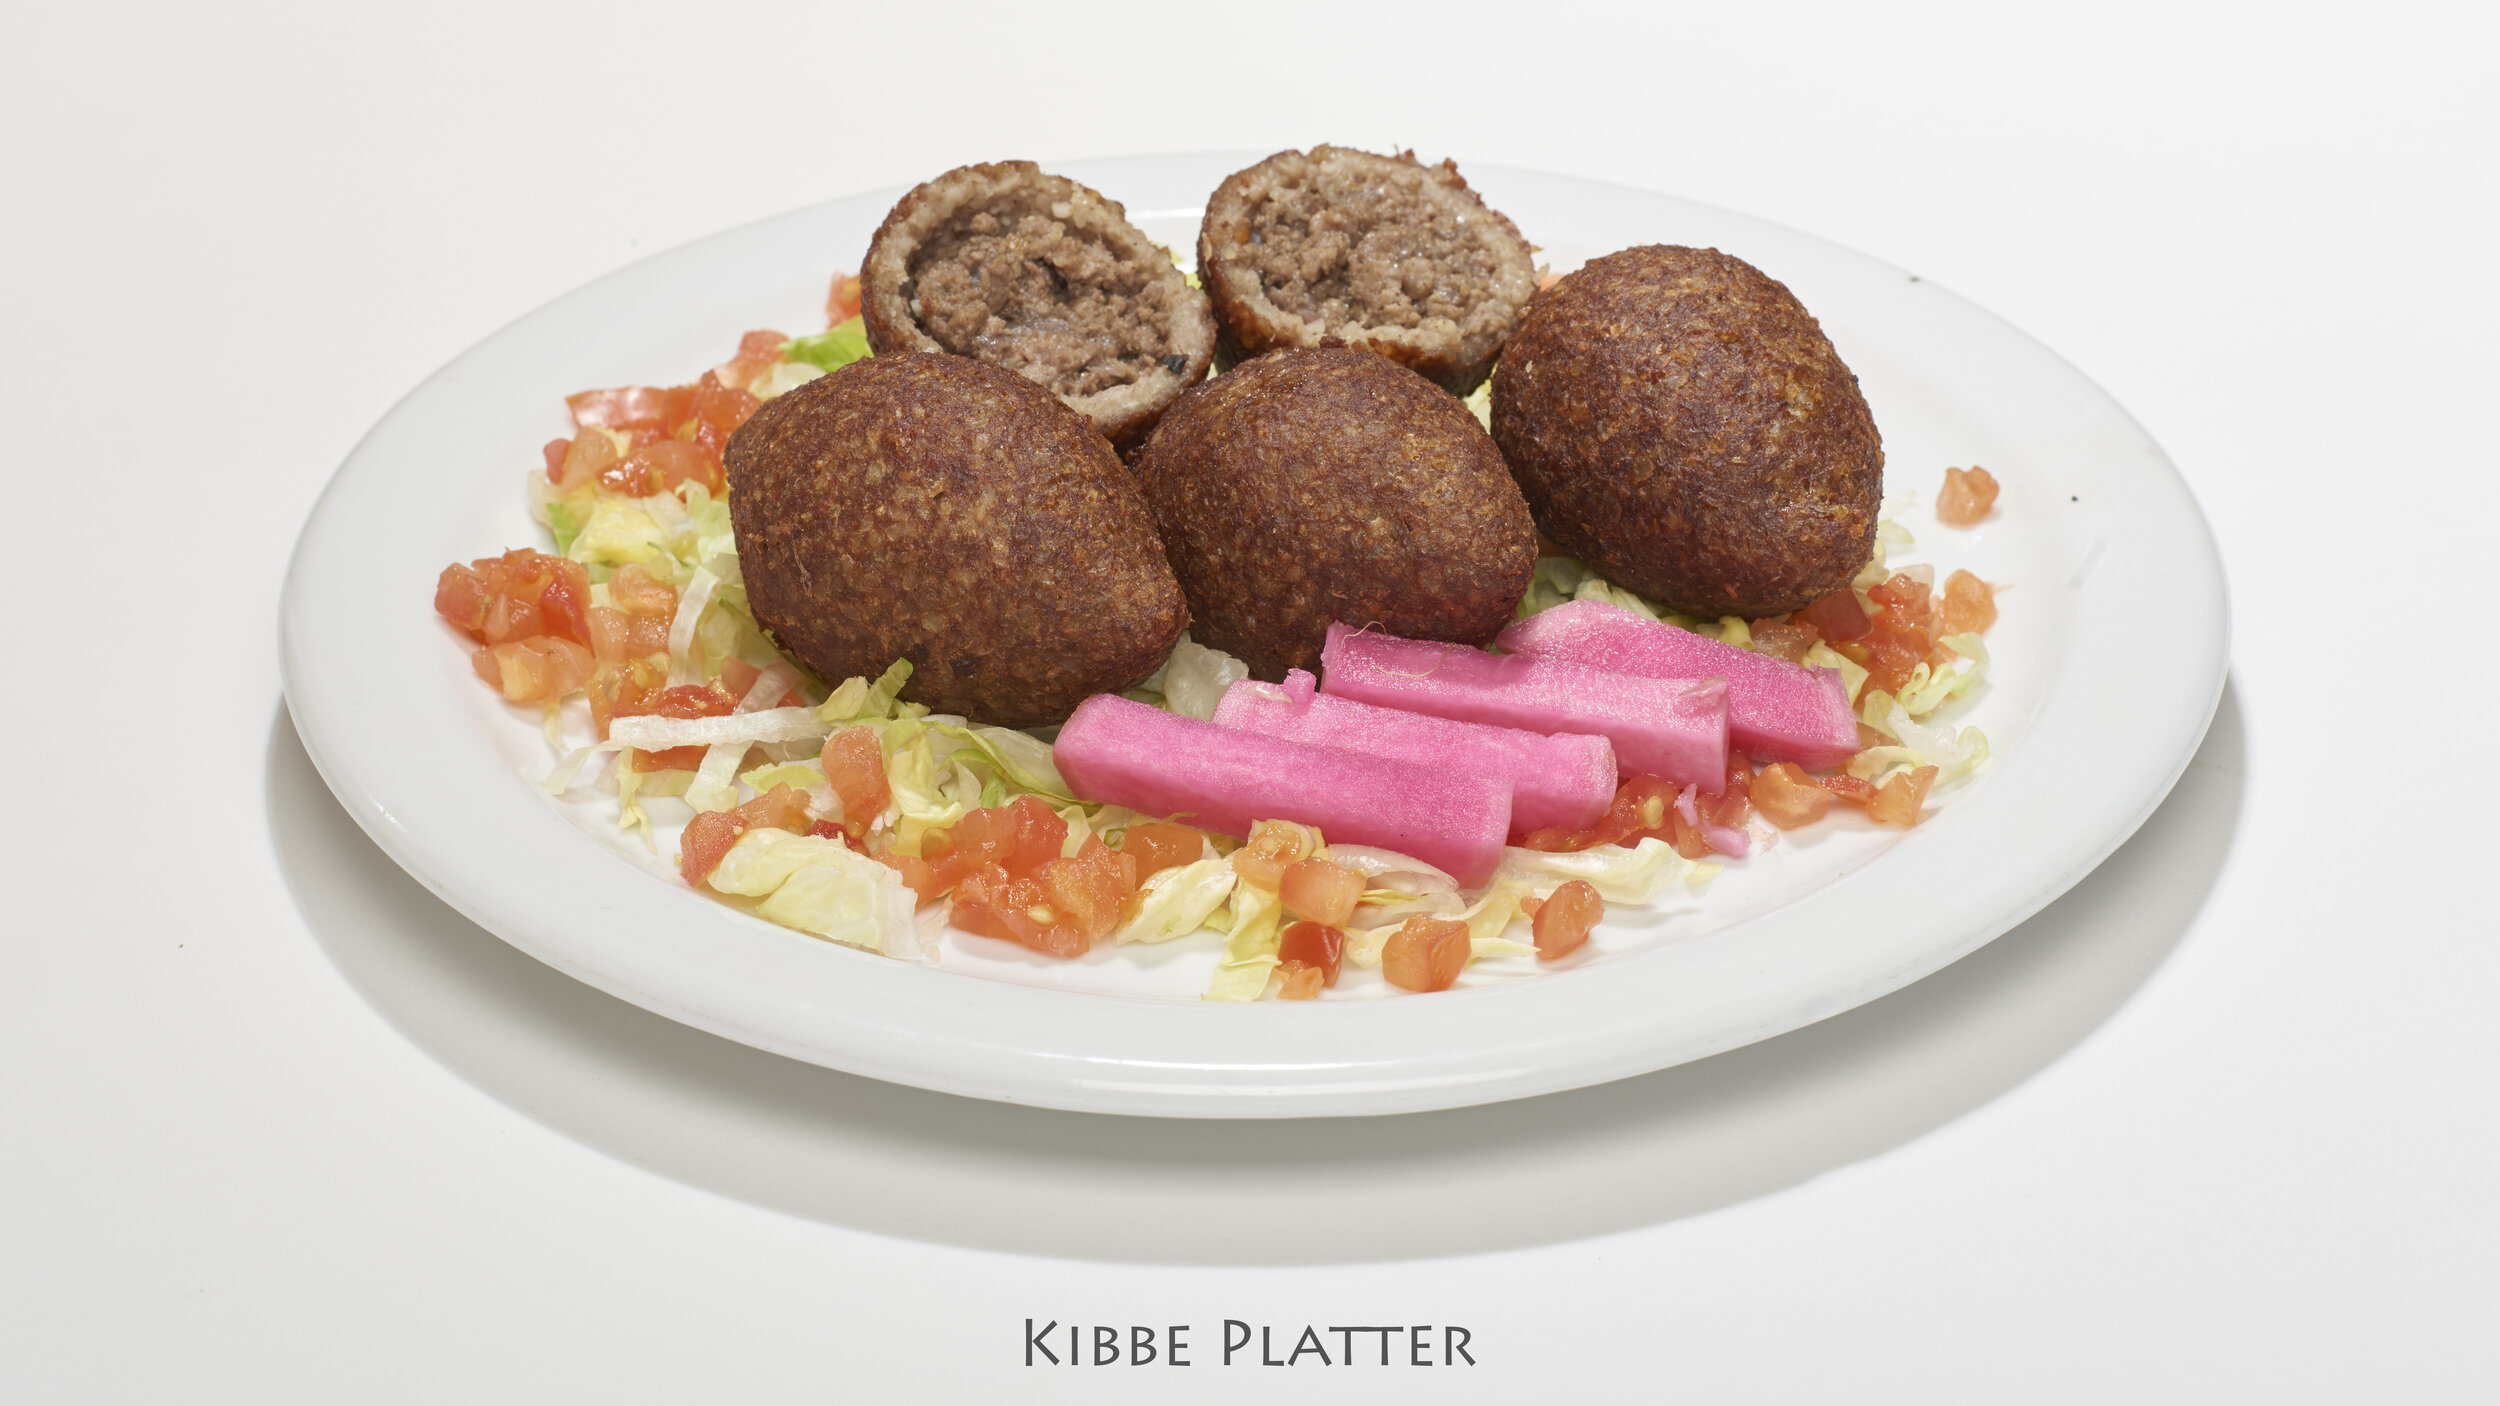 Kibbe Platter